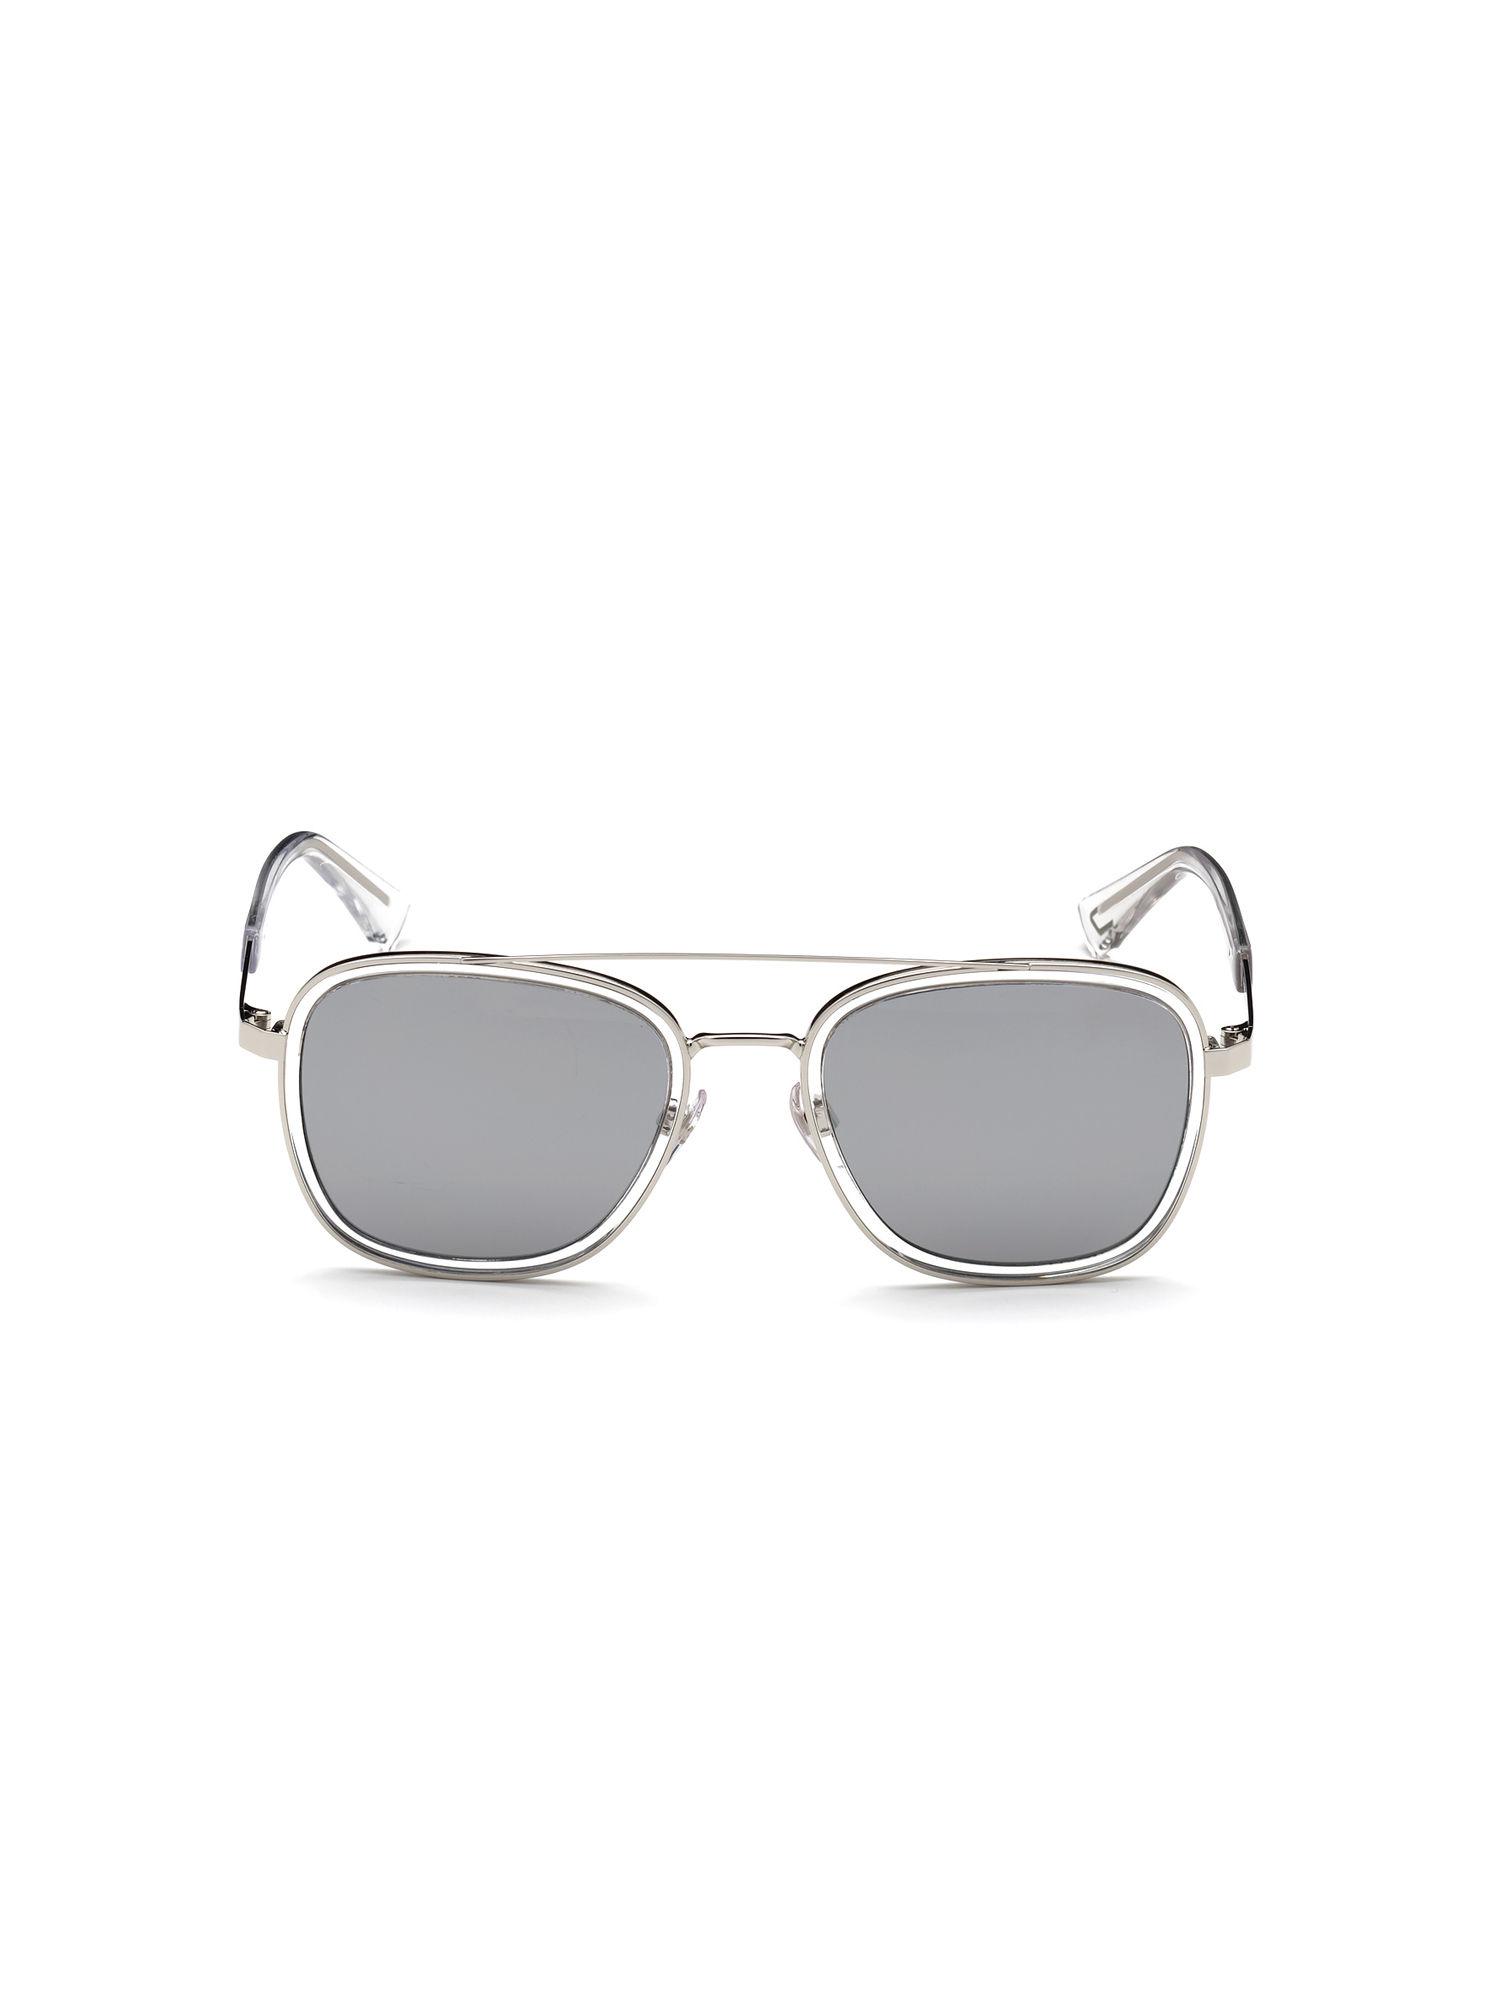 silver-square-full-rim-sunglasses---dl0320-52-16c